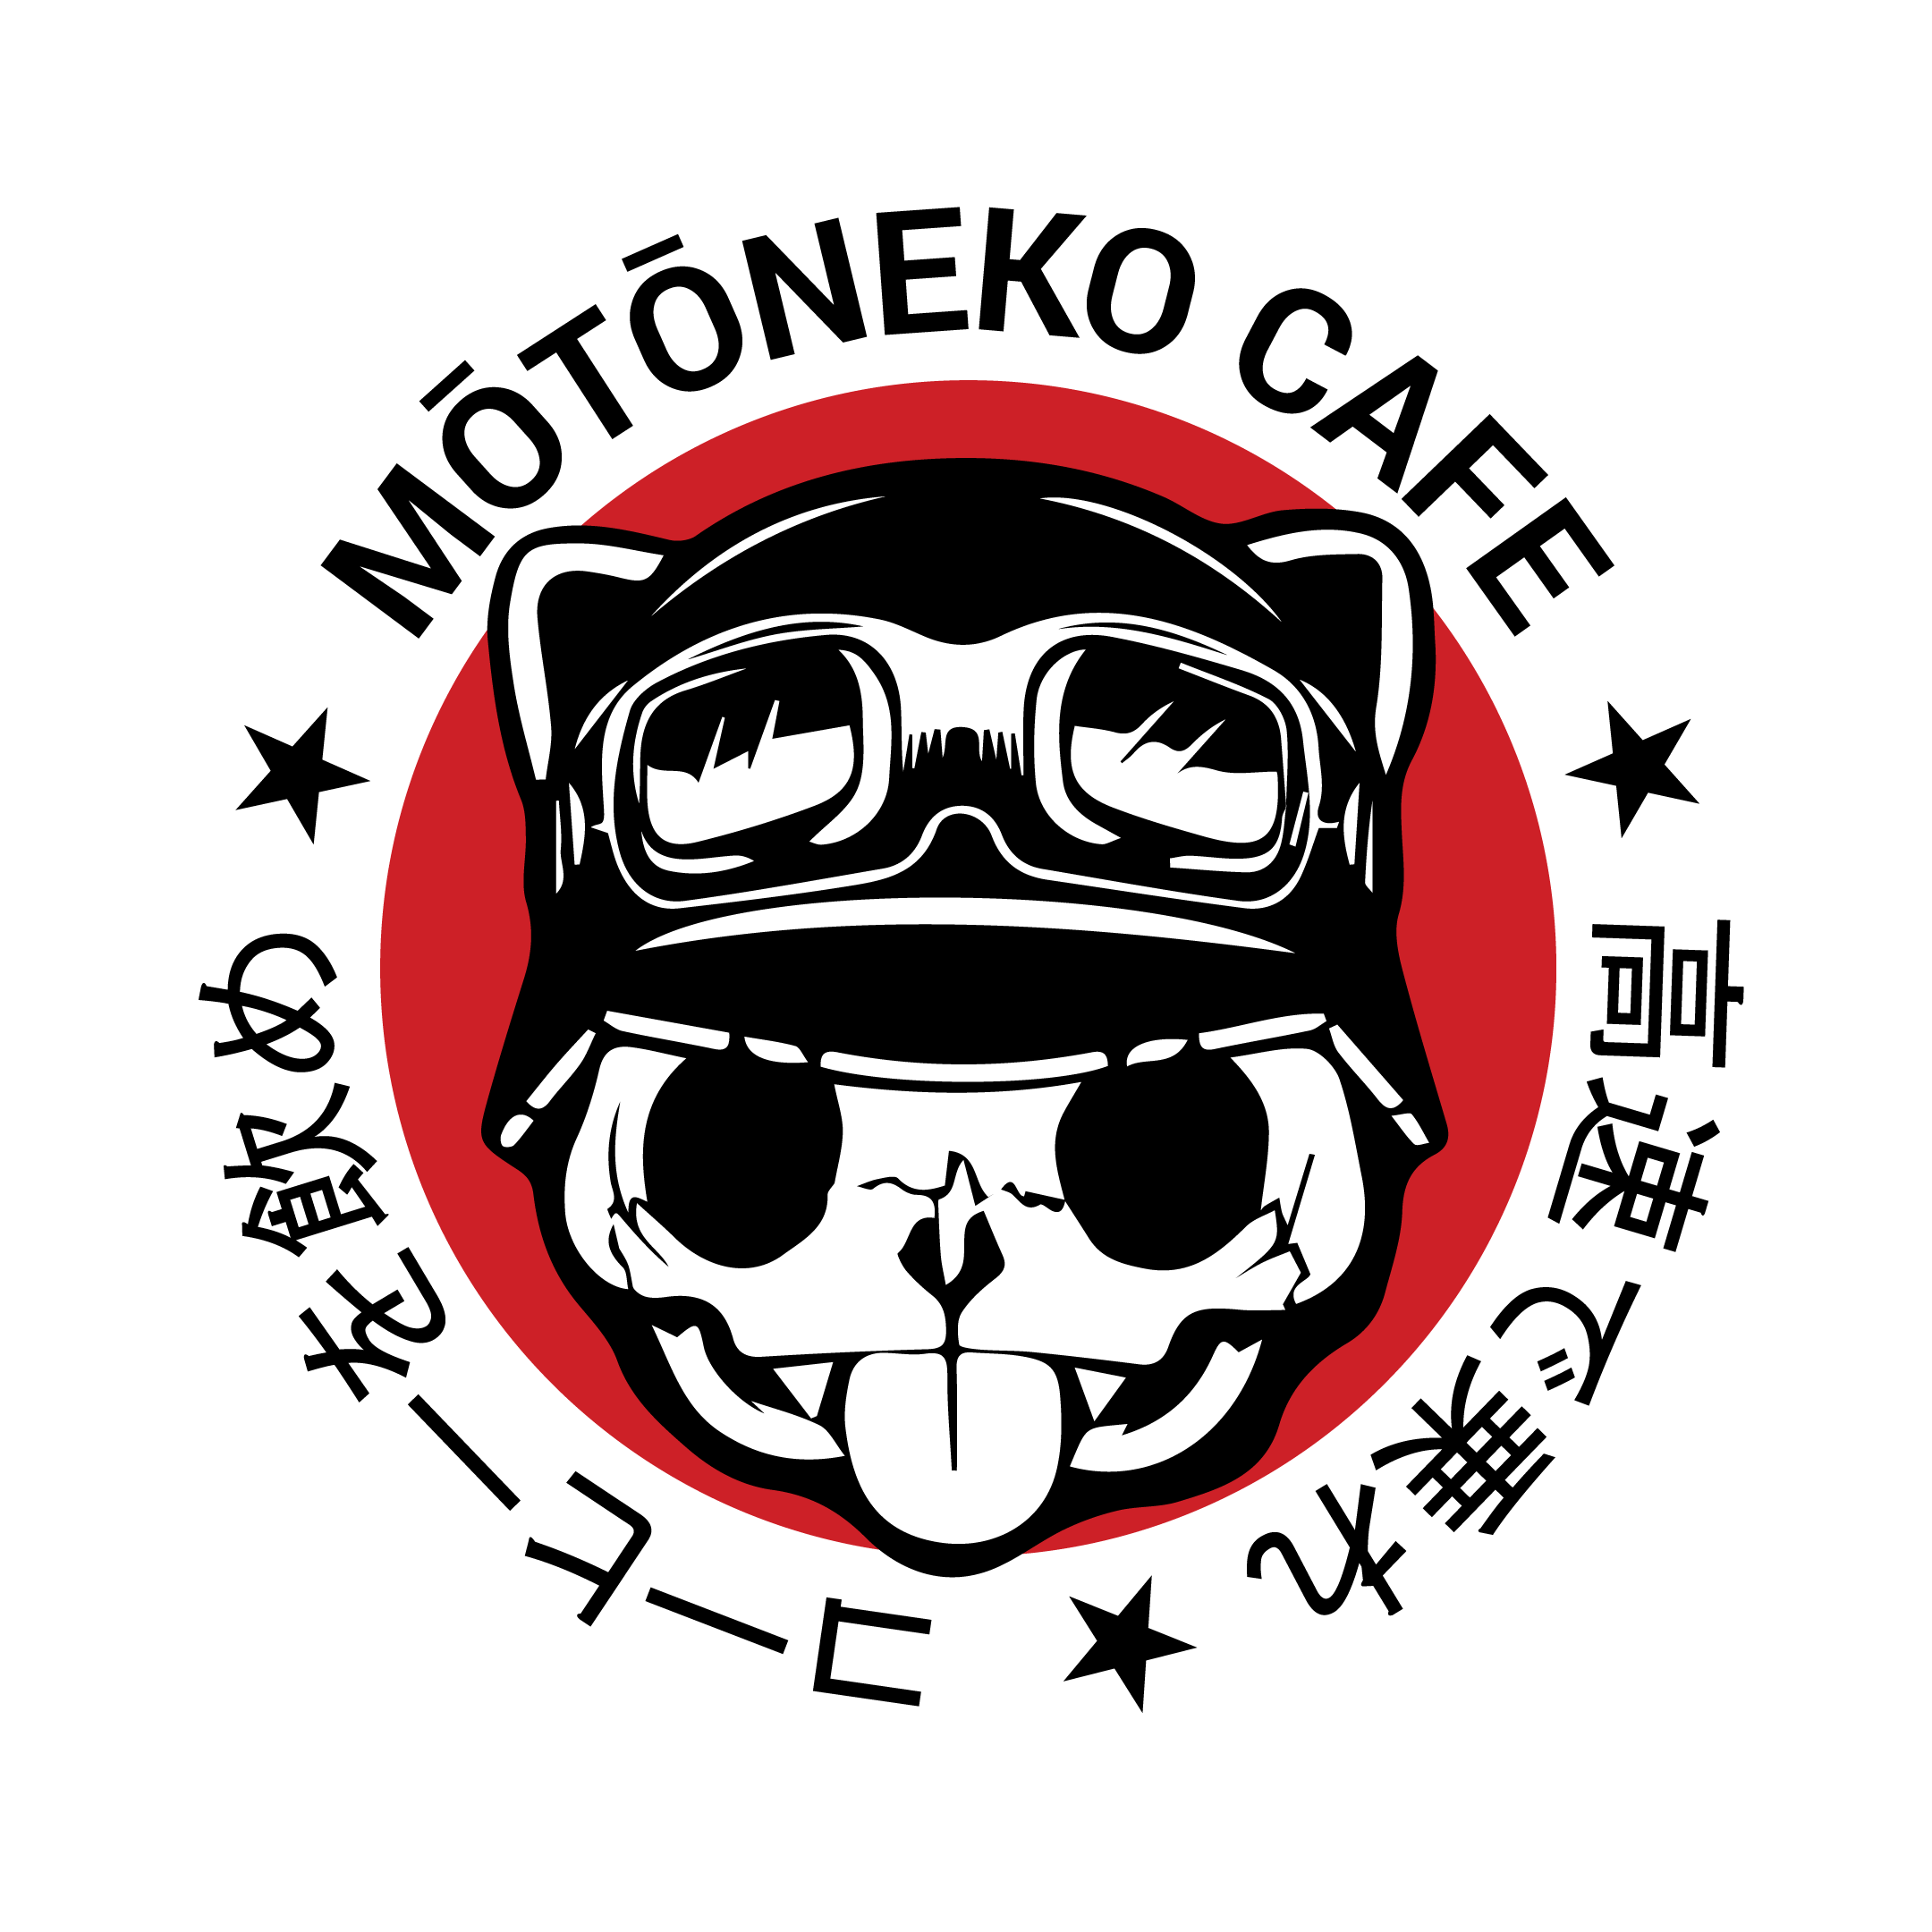 Mōtōneko